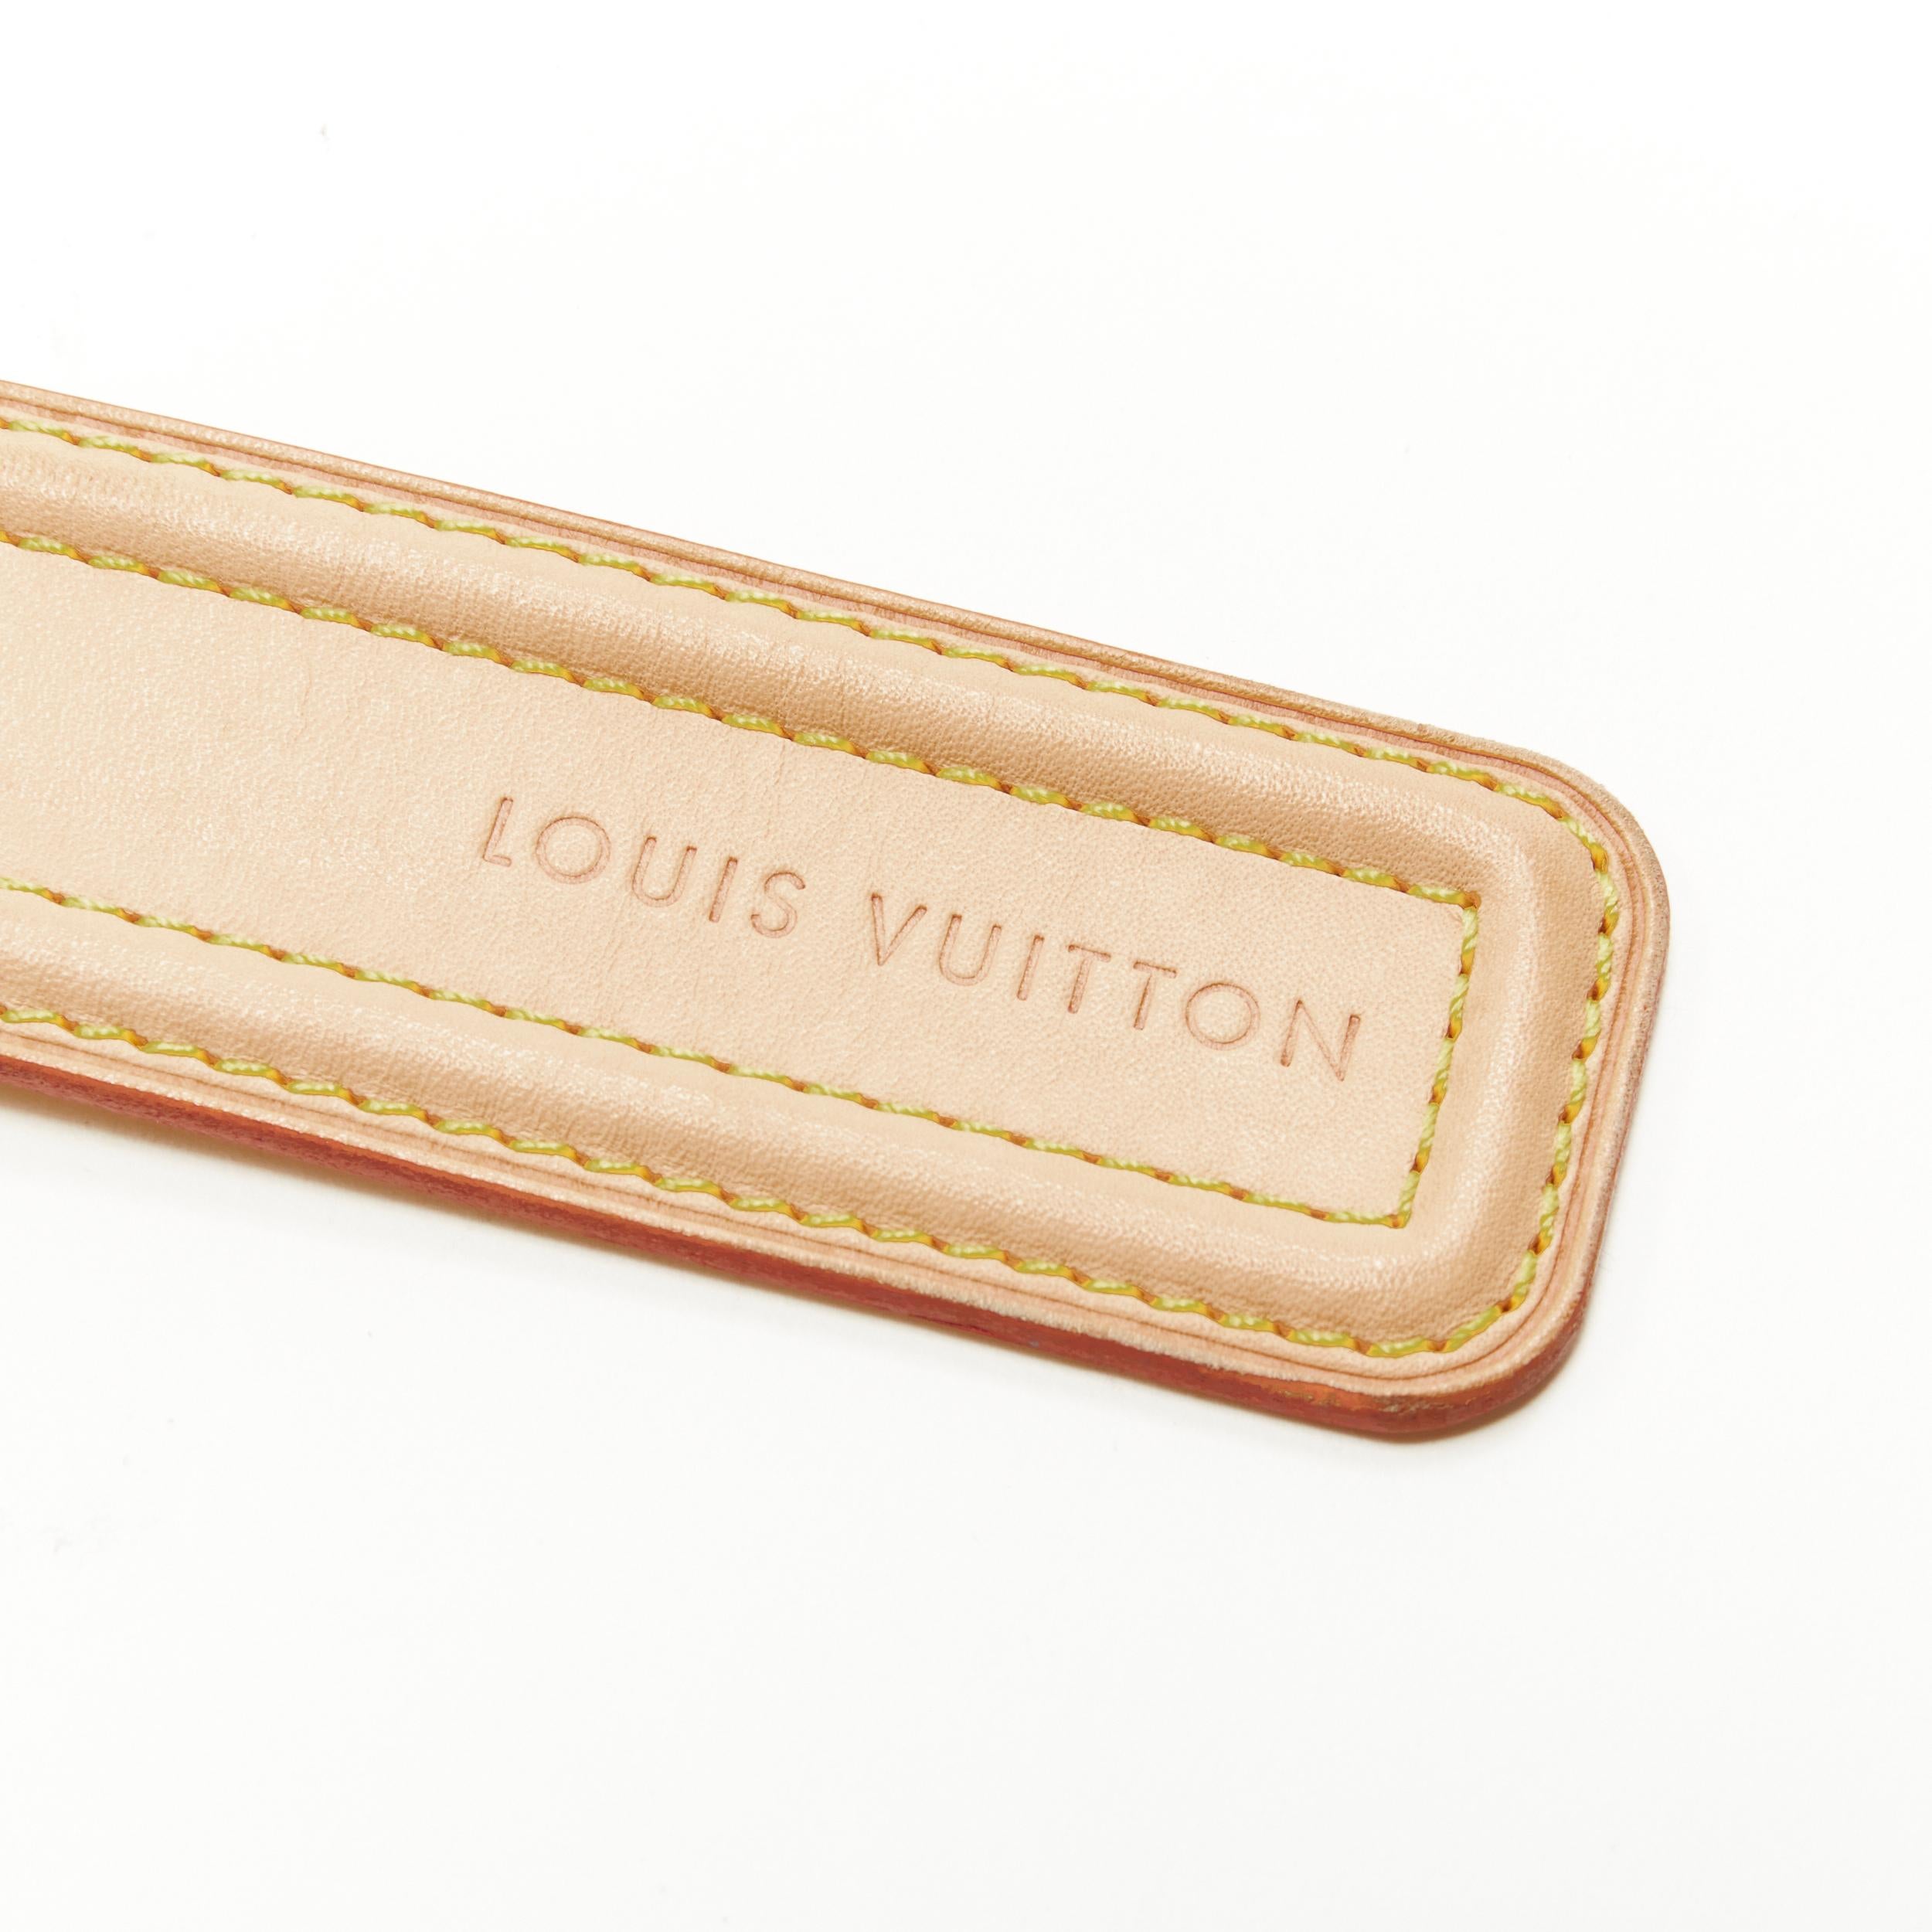 LOUIS VUITTON Vachetta Signature tan leather gold buckle belt 80cm/32